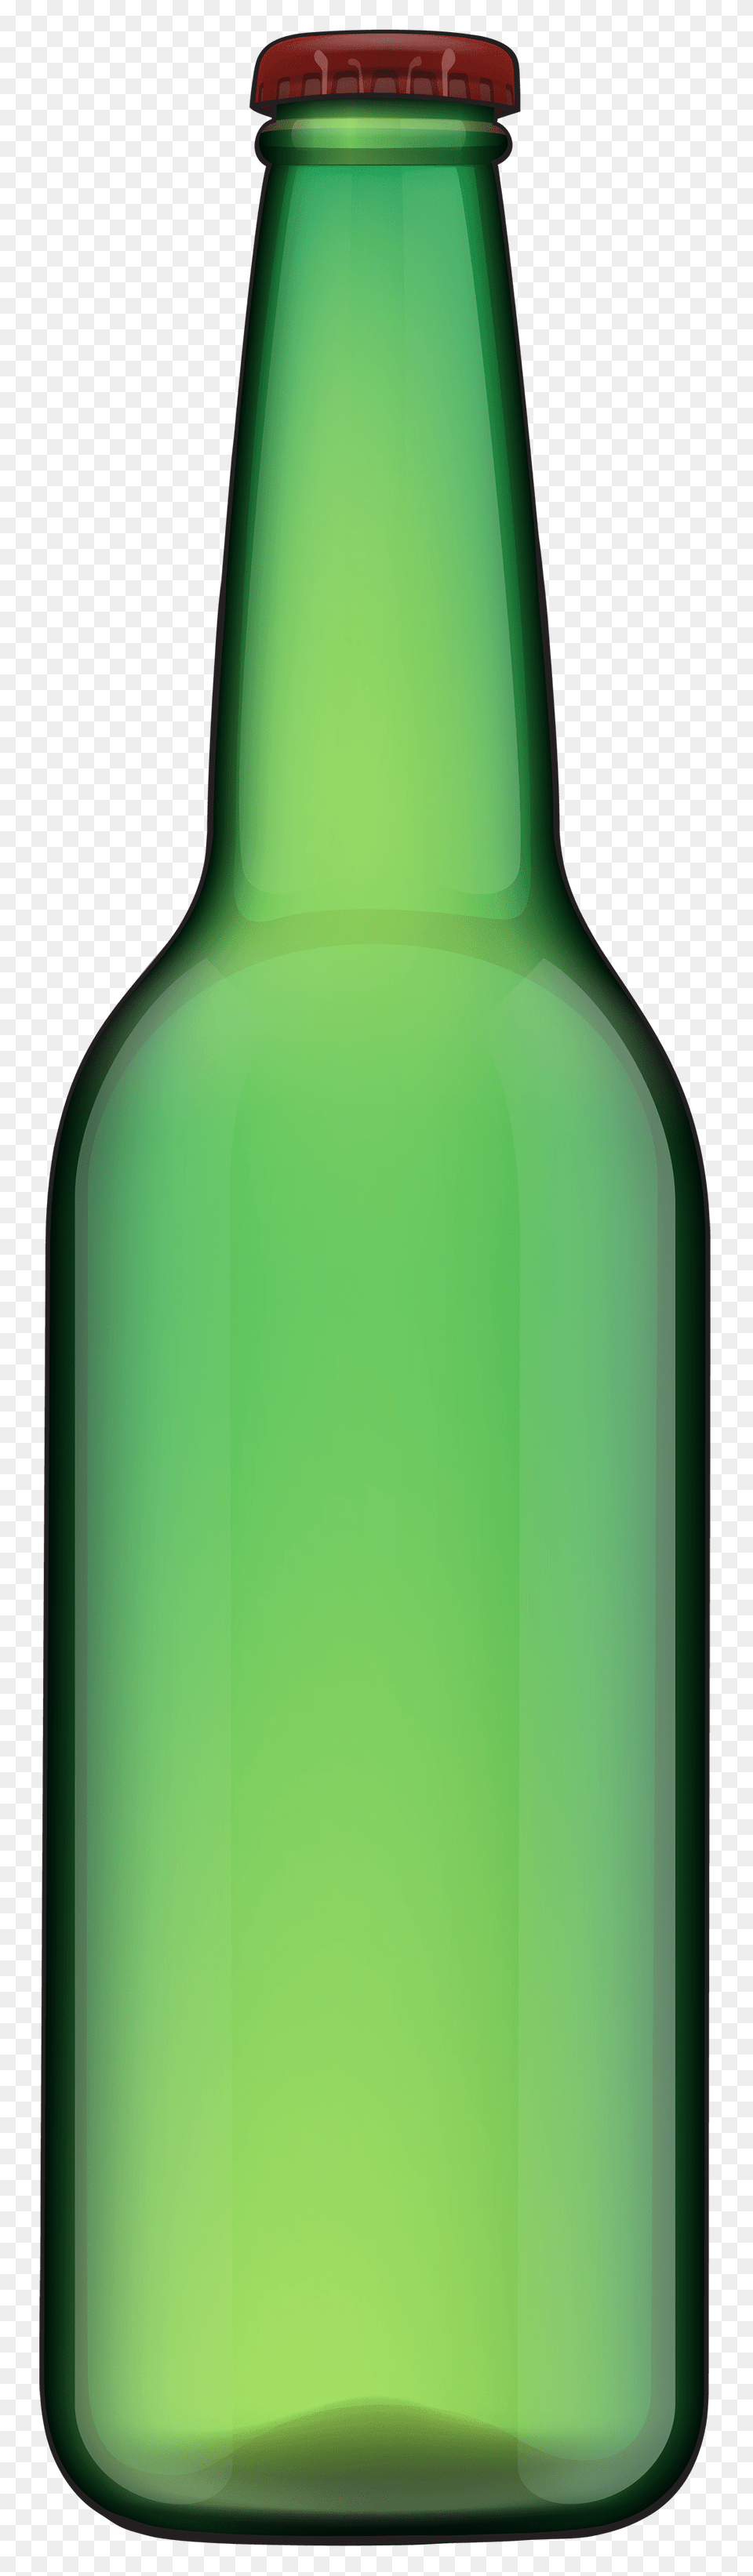 Green Beer Bottle Clipart Best Web Types Of Baby Bottles, Alcohol, Beer Bottle, Beverage, Liquor Free Png